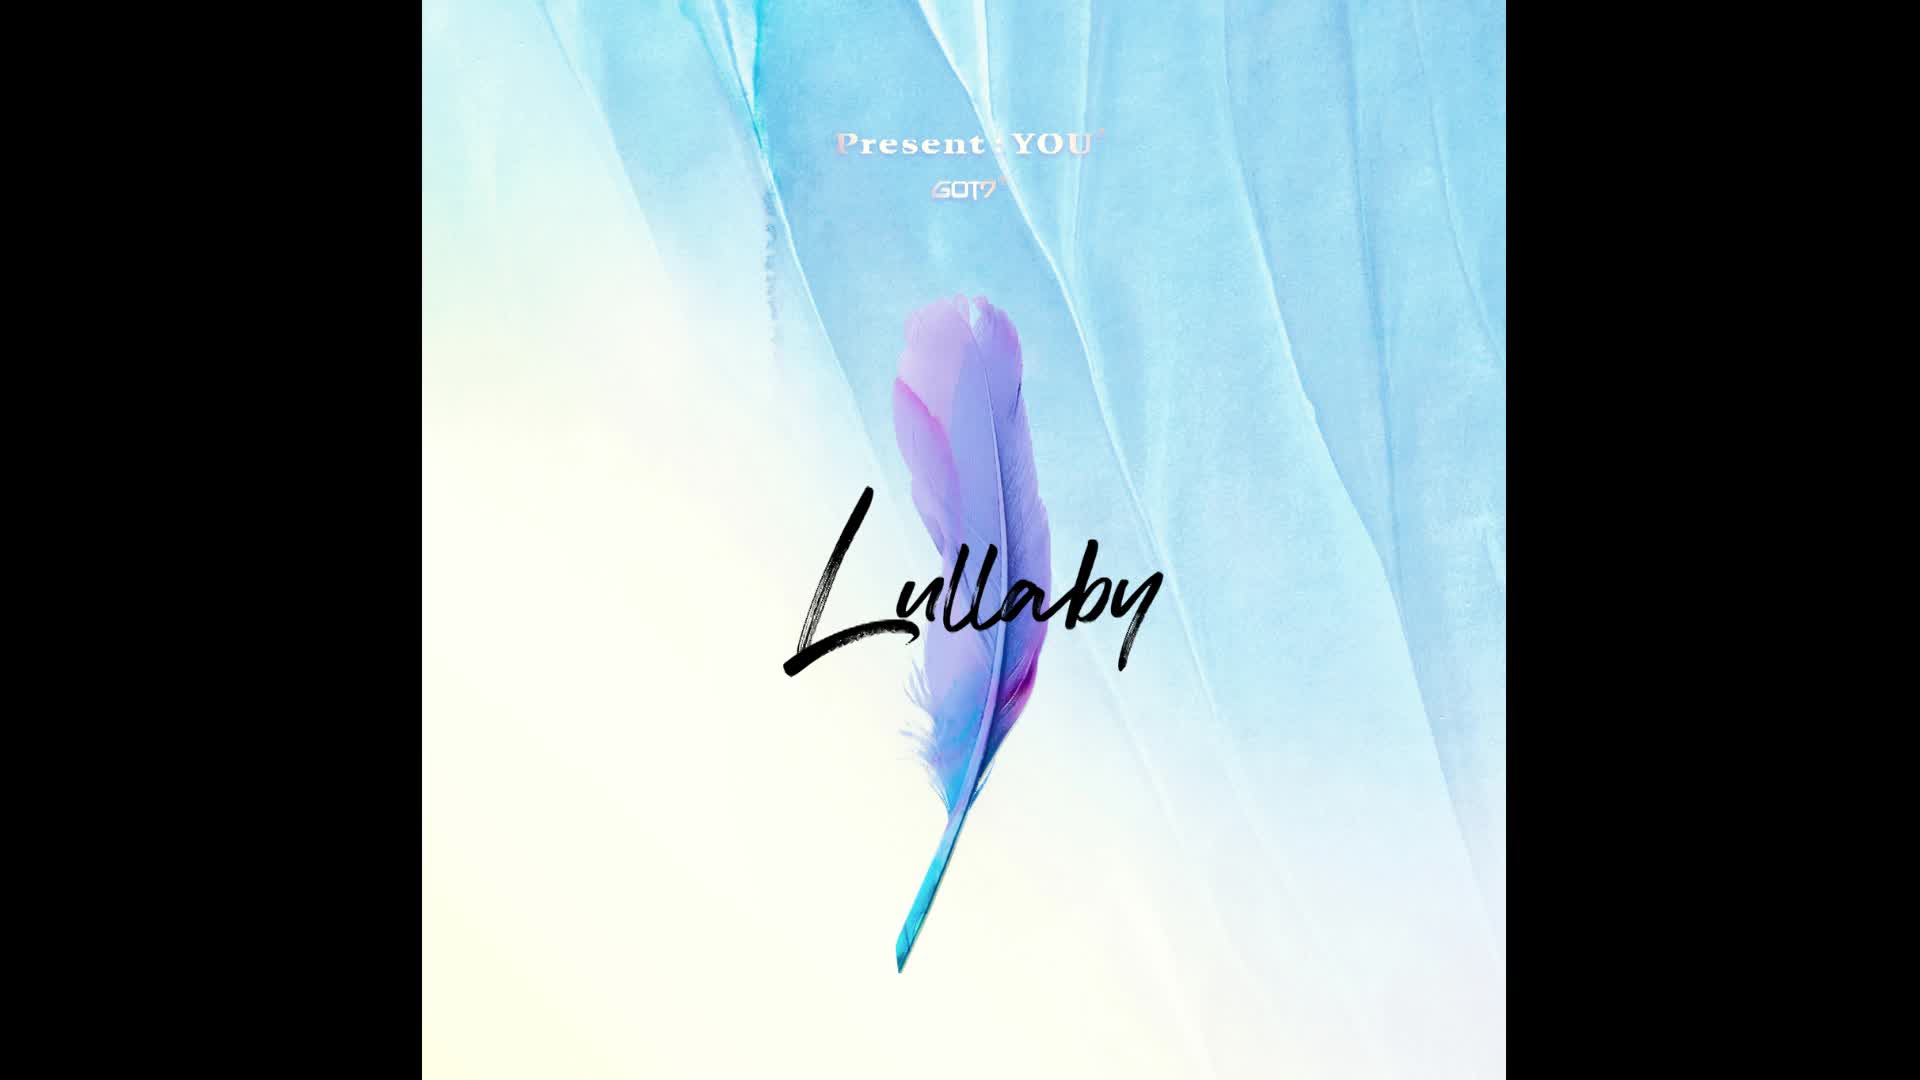 GOT7(갓세븐) "Lullaby" Track Spoiler